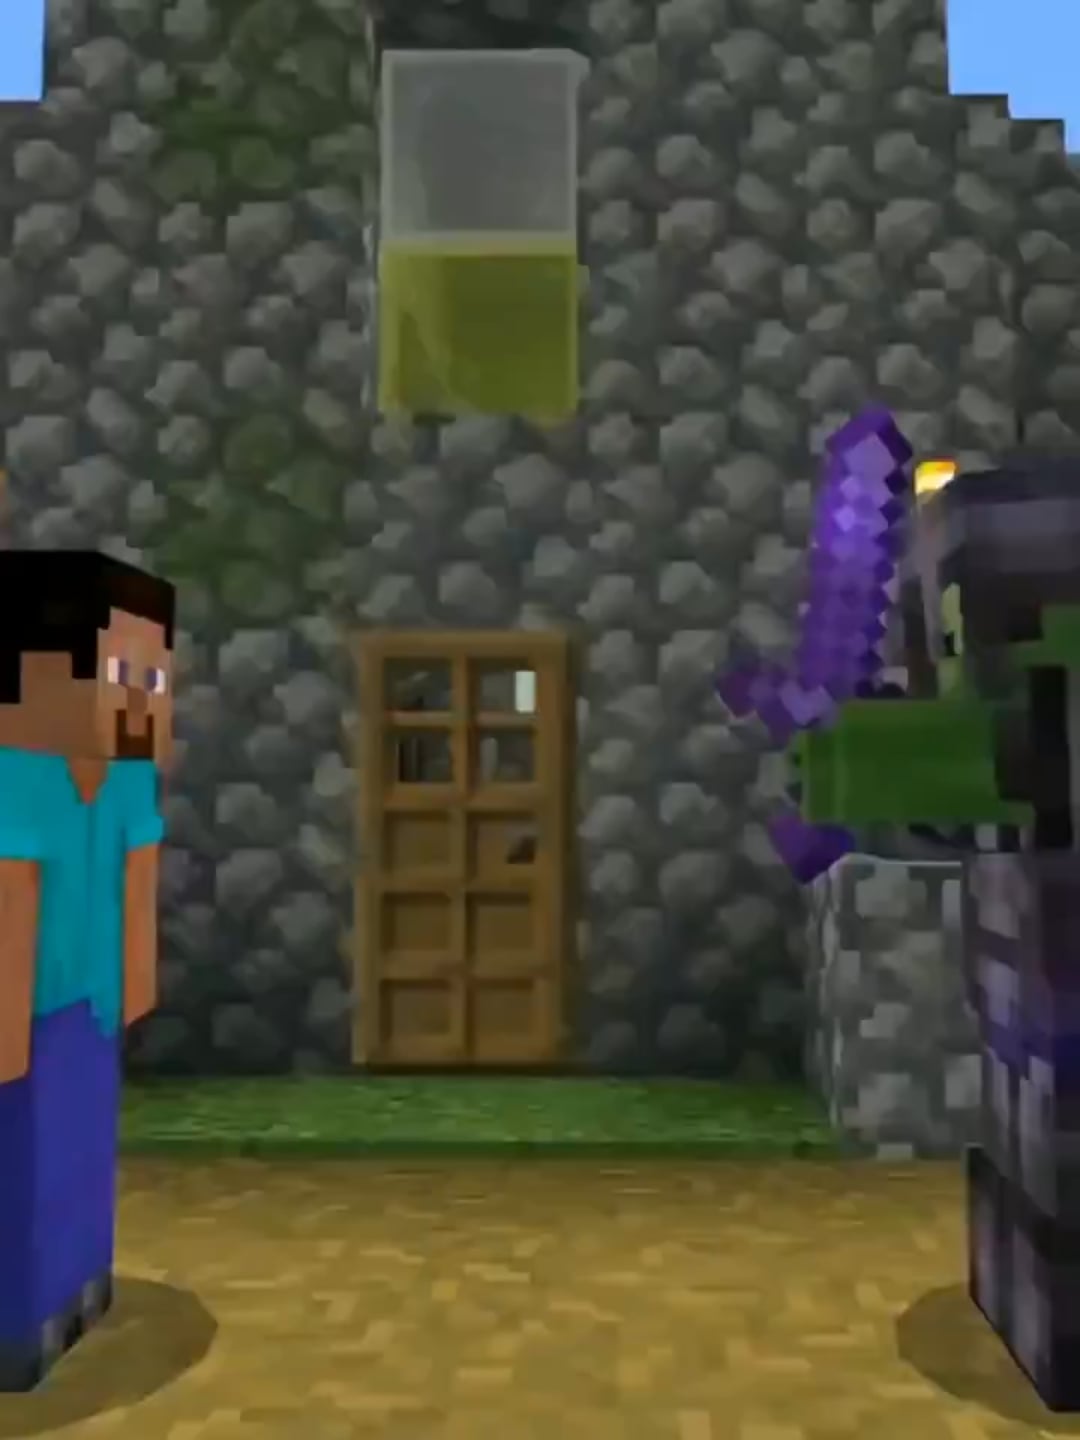 Minecraft Memes - "Who would win: Steve vs. Creeper"